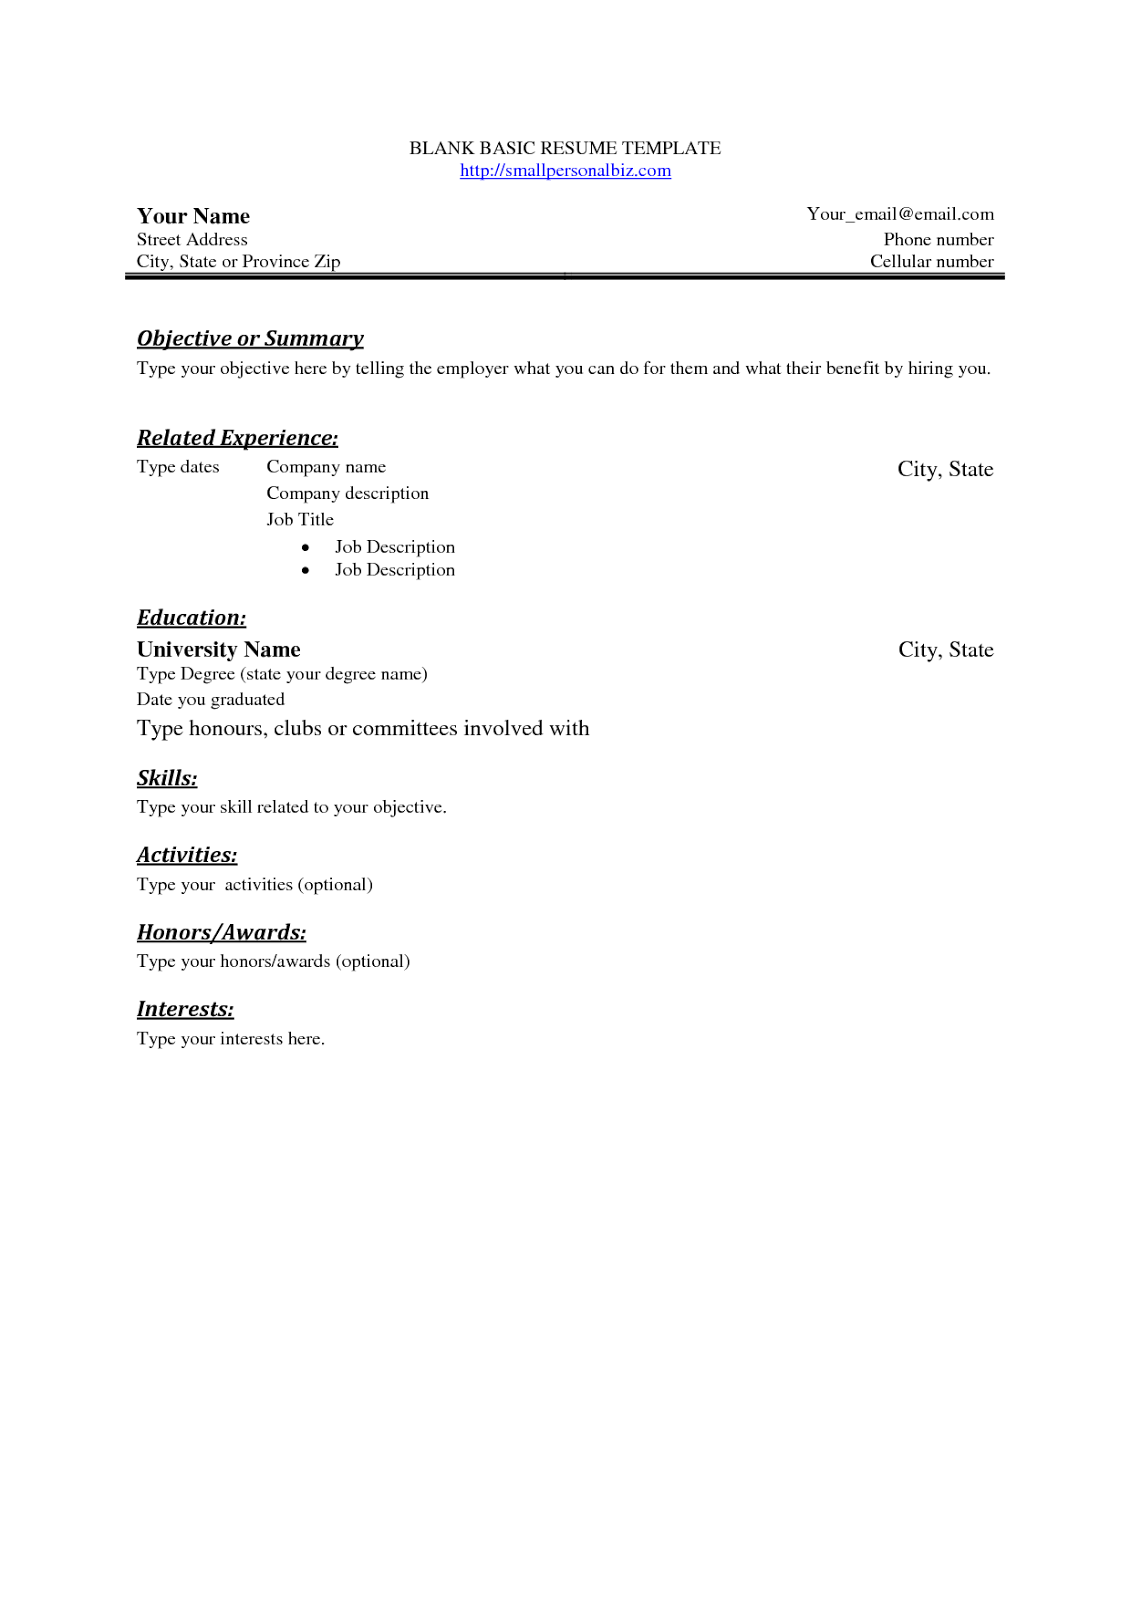 Copy of blank resume